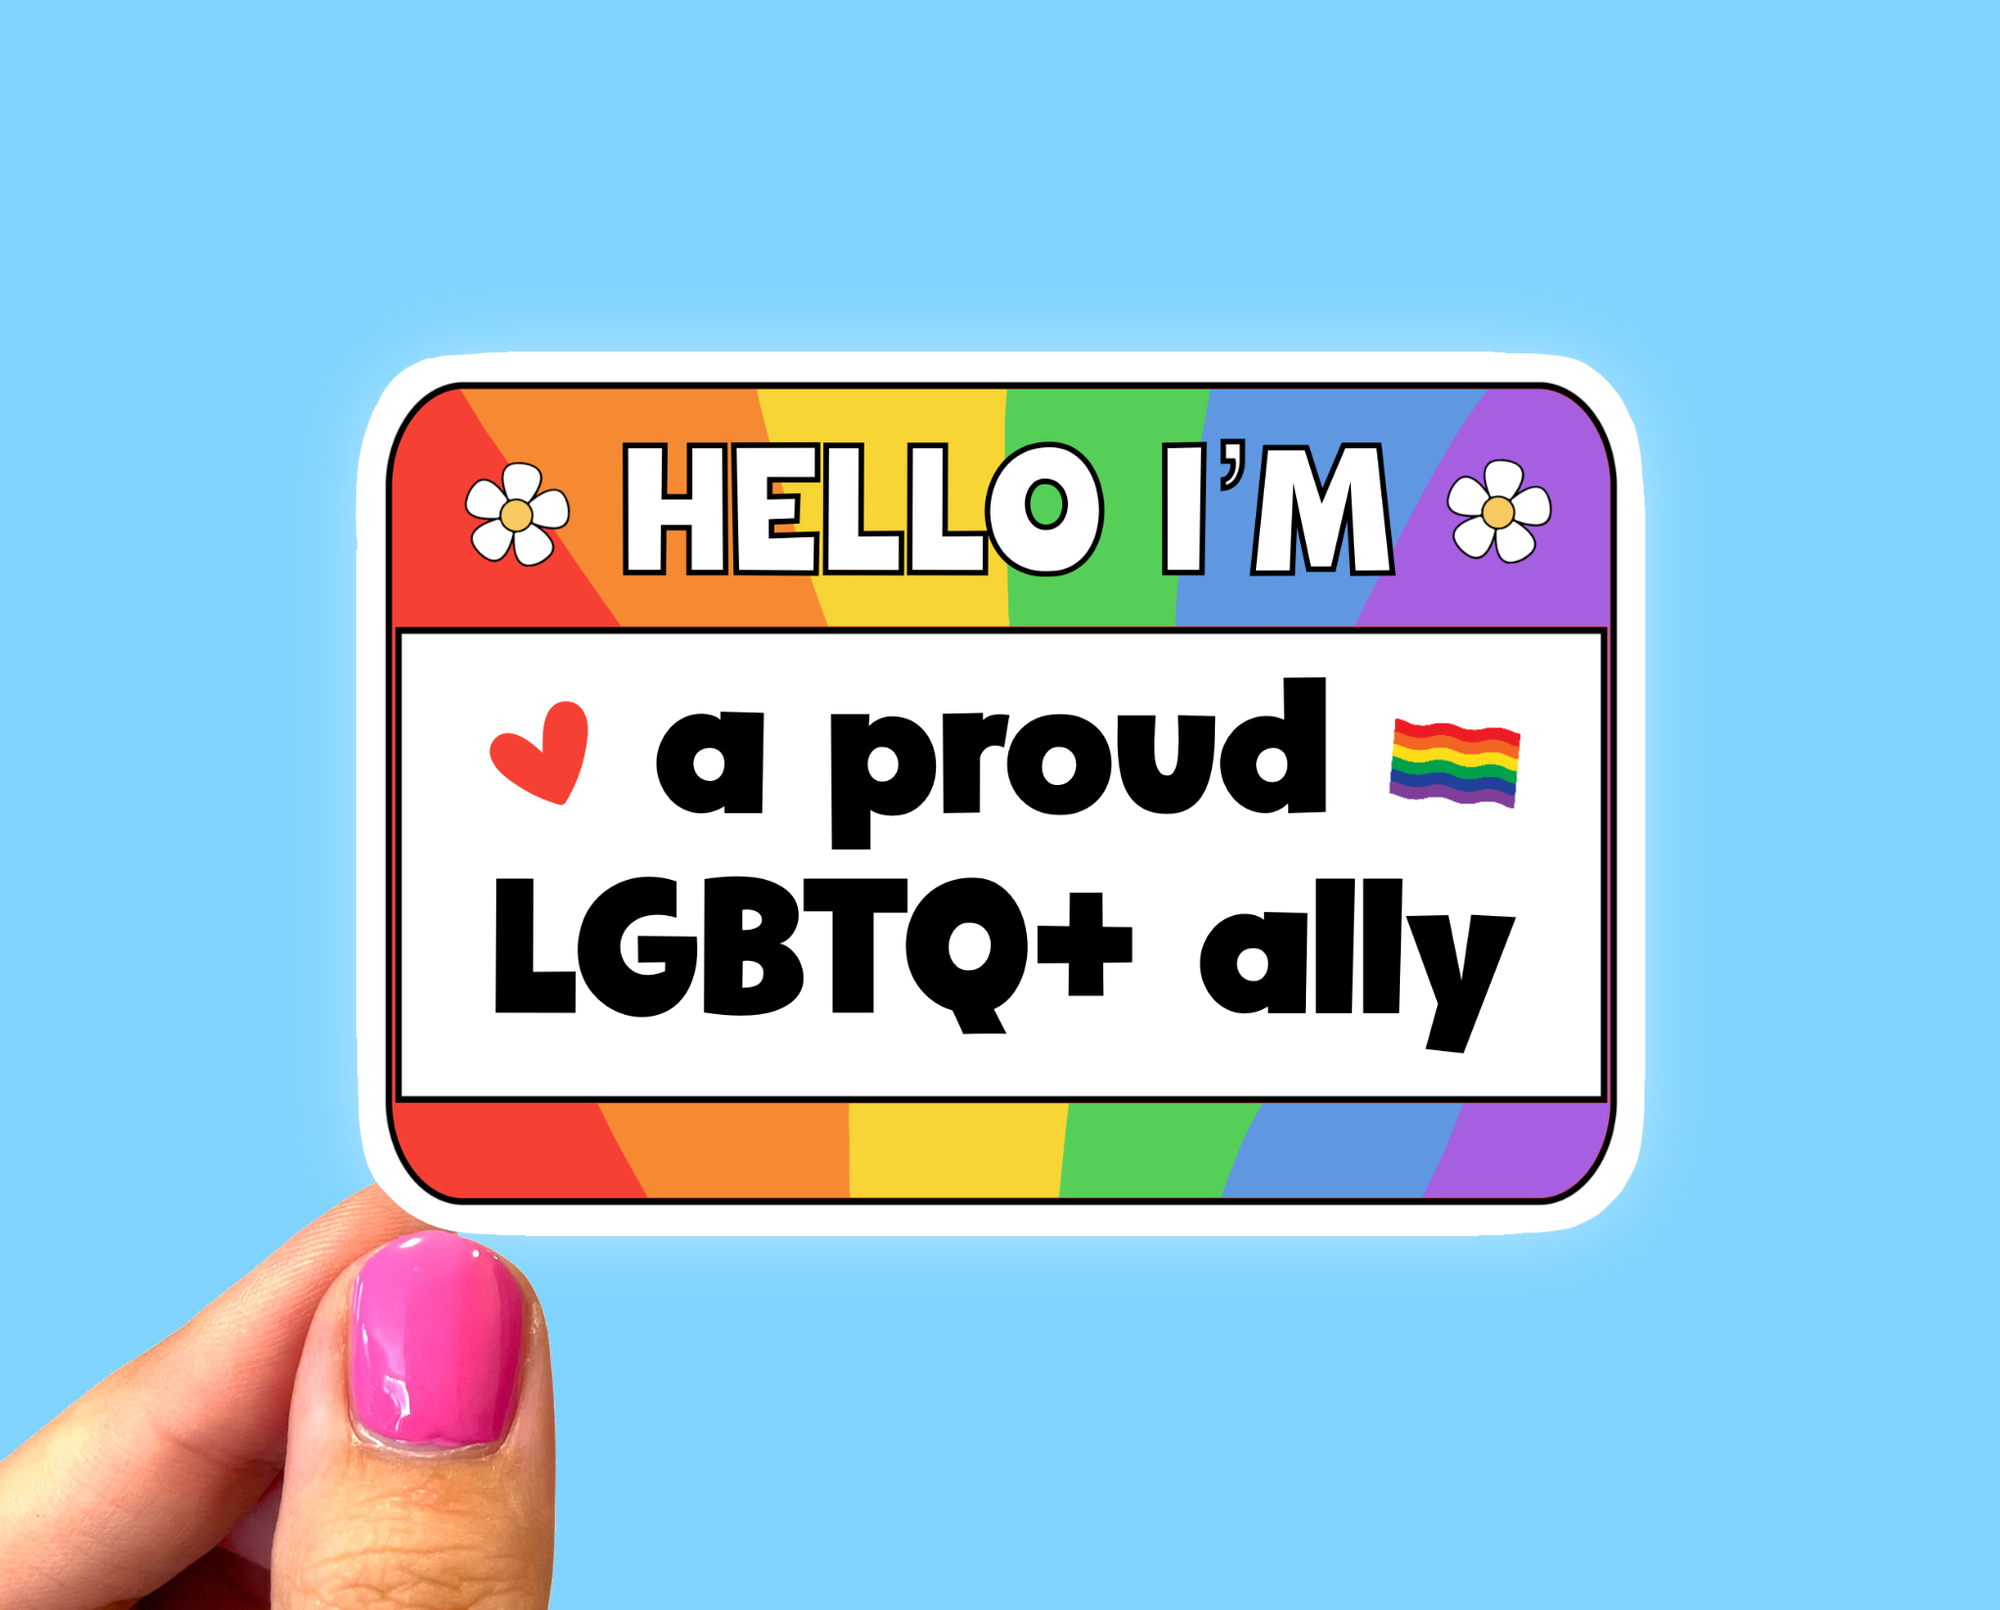 Hello I’m a proud LGBTQ+ ally